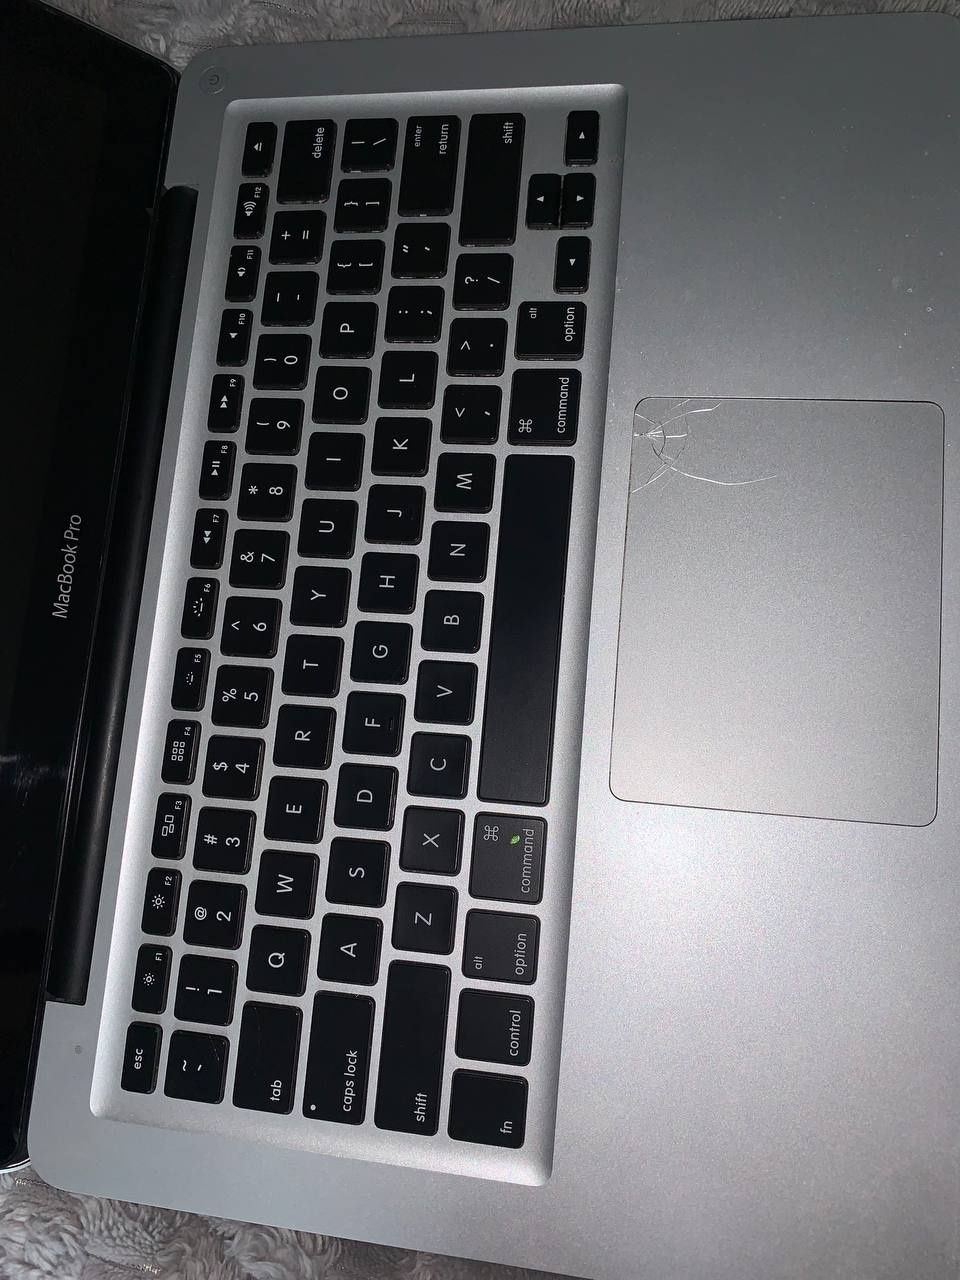 Ноутбук Apple MacBook Pro 13" (MD101) 2012